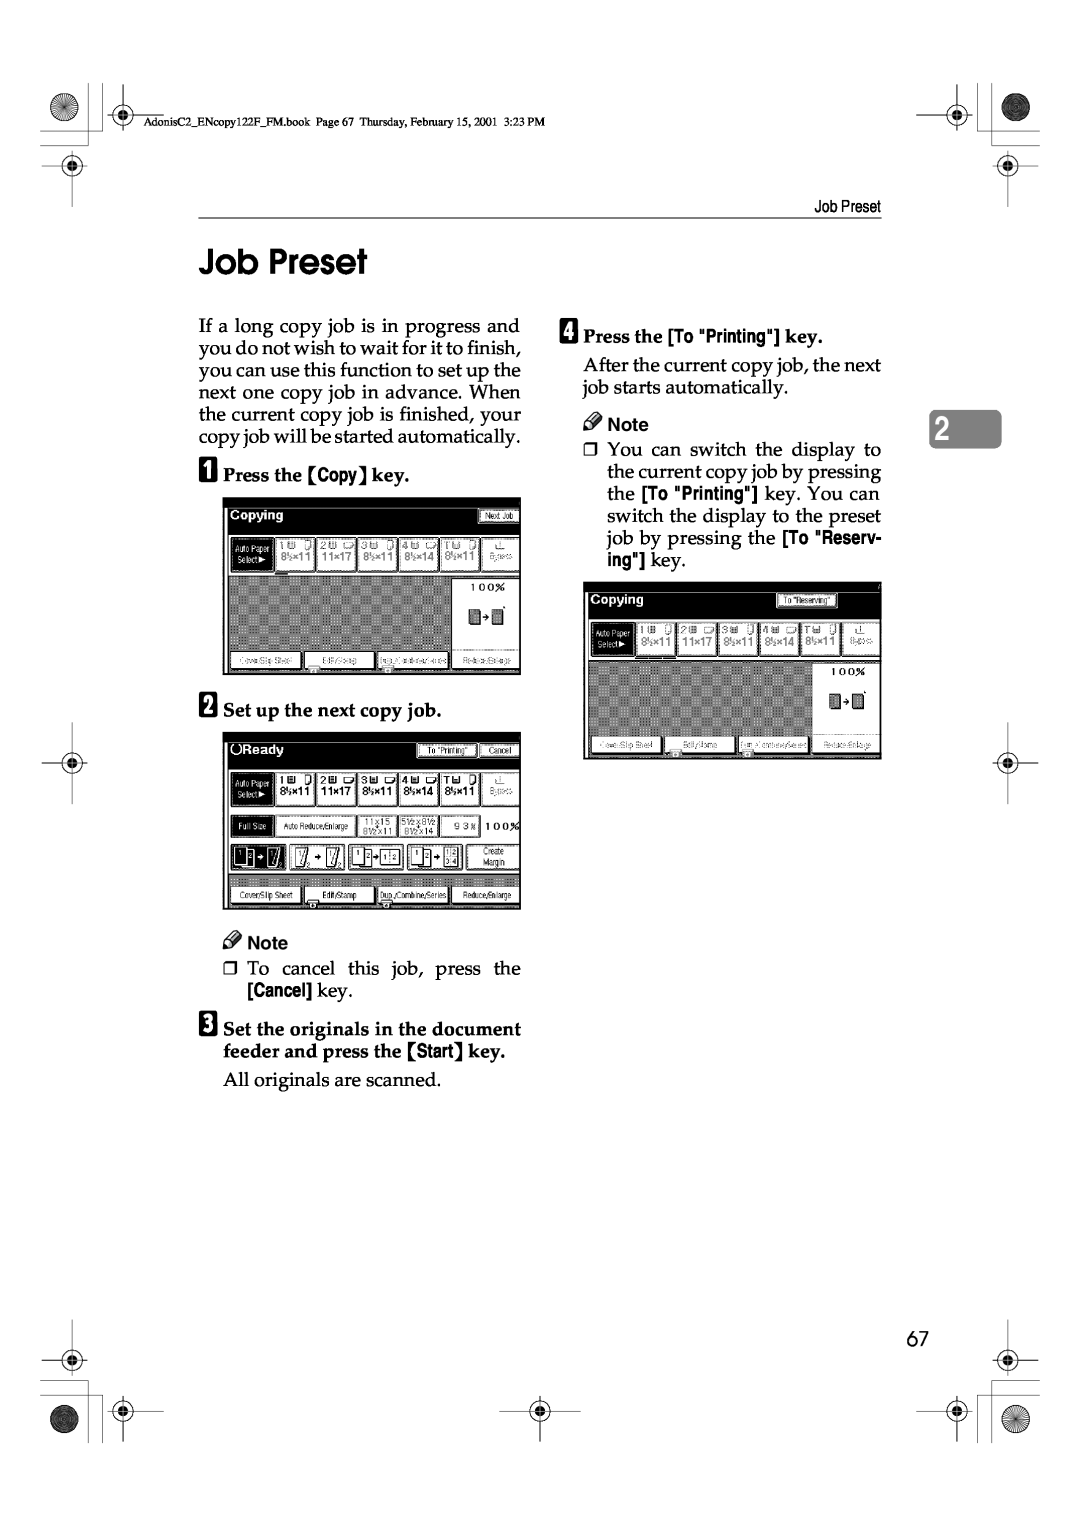 Savin 2235, 2245 manual Job Preset, A Press the Copy key B Set up the next copy job, Cancel key, D Press the To Printing key 